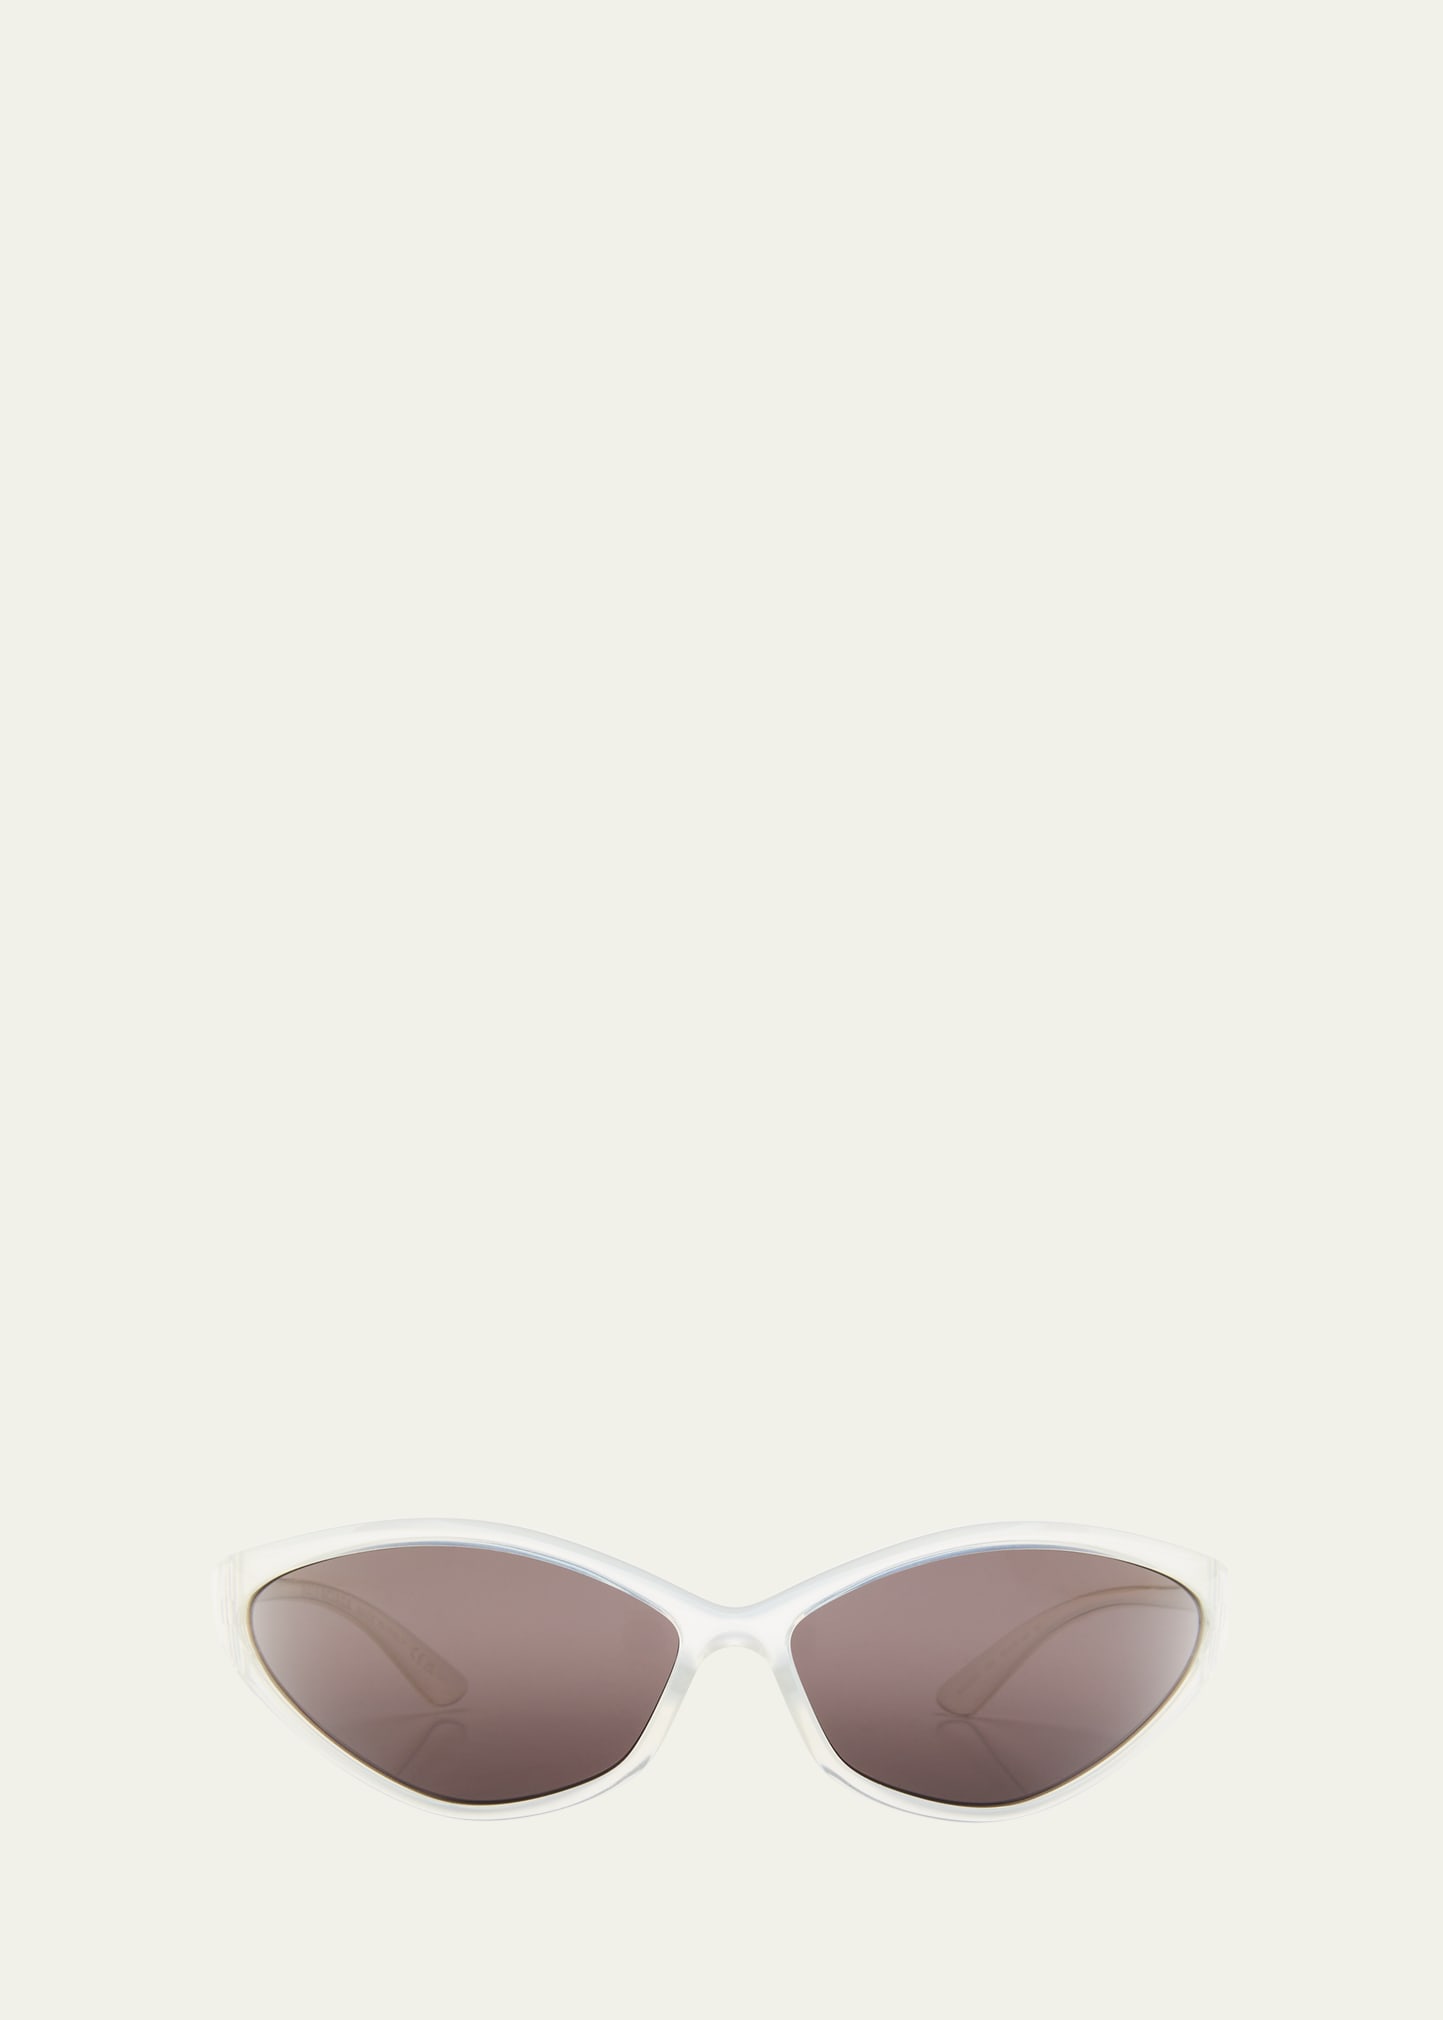 Balenciaga Men's Acetate Wrap Sunglasses In Shiny Iridescent